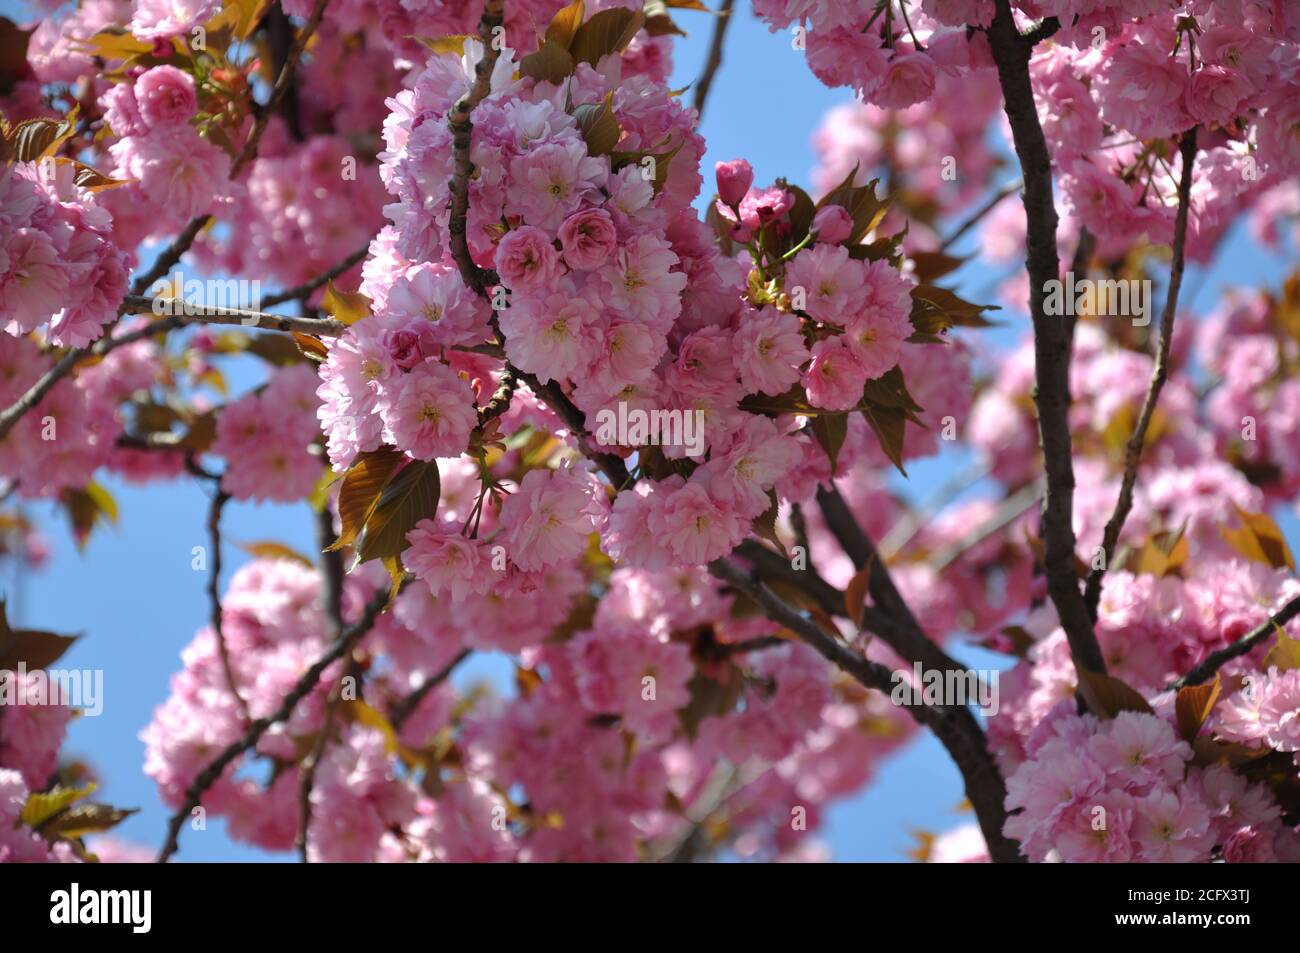 Abundant lush flowering of cherry blossoms in spring. Stock Photo